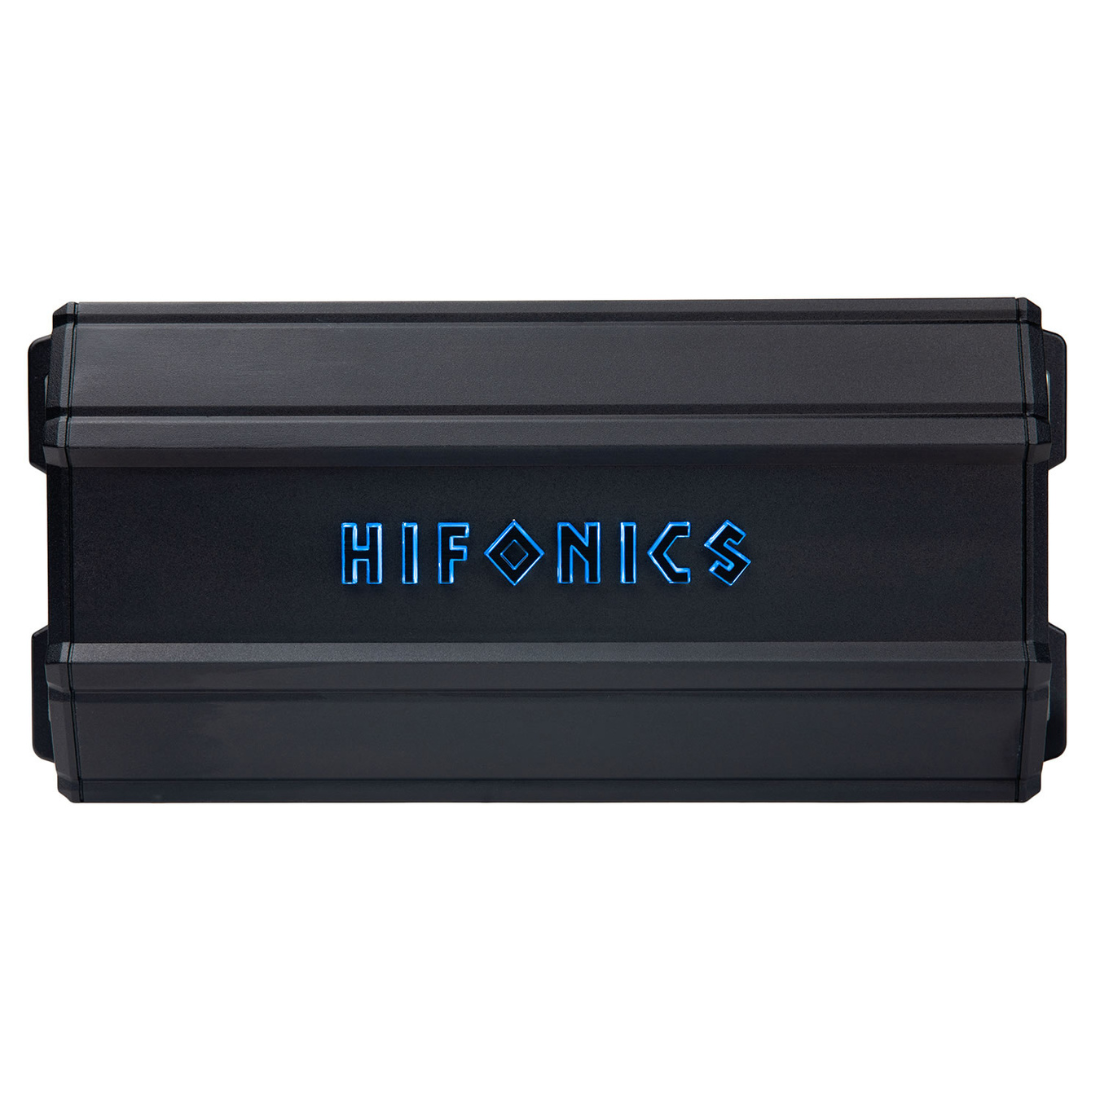 Hifonics ZD-1750.5D 5-Channel 1750W Max Class-D Full Range Car Audio Amplifier